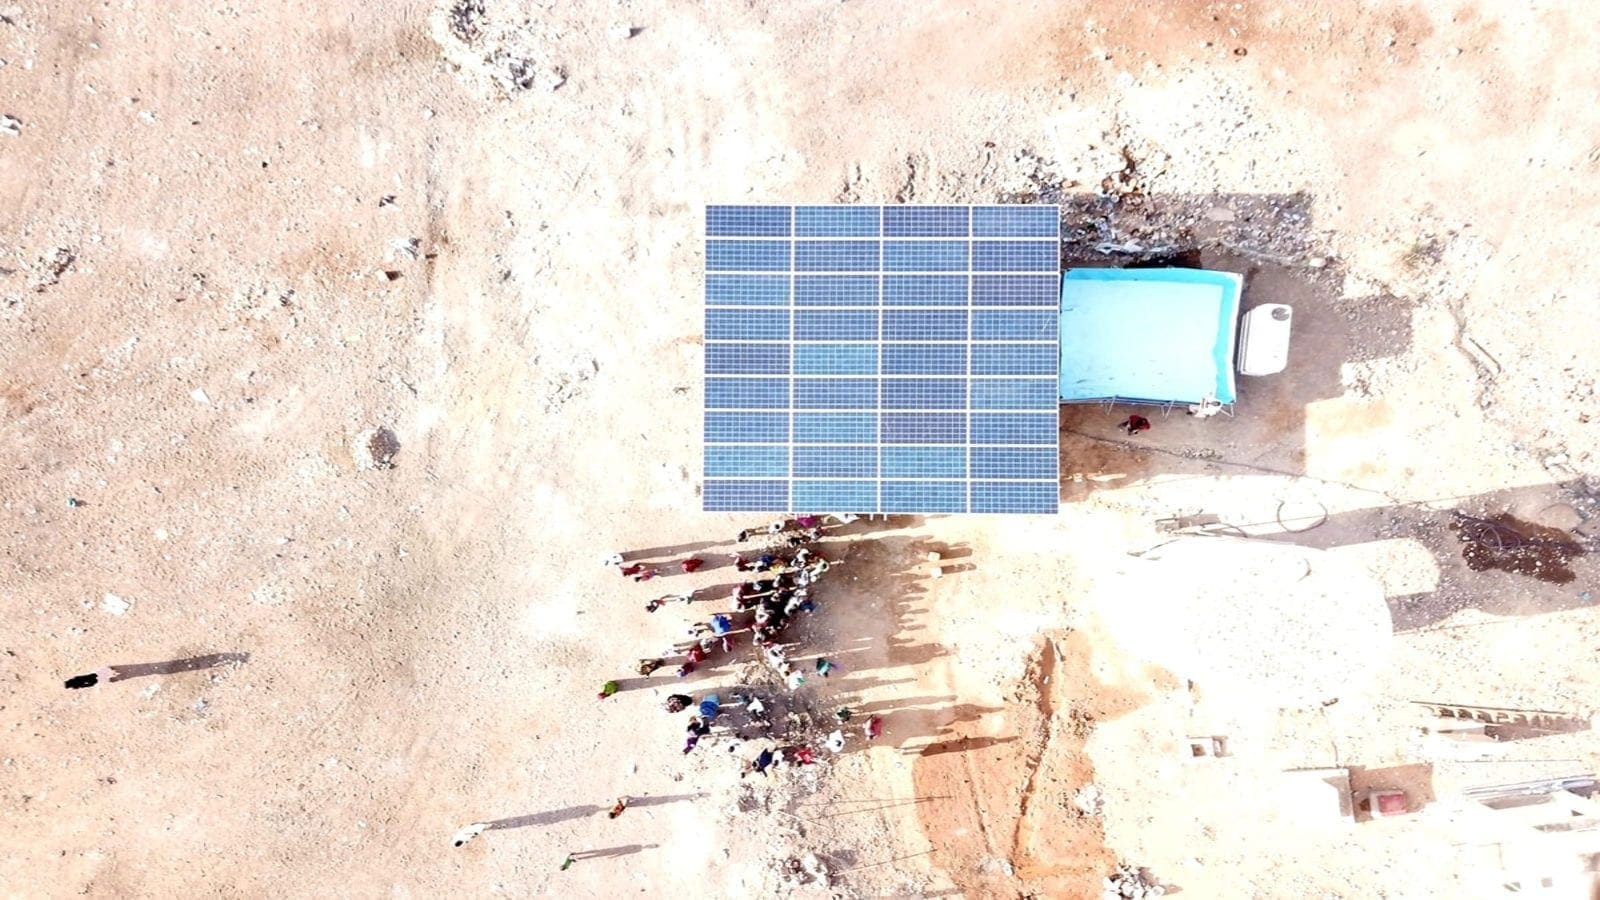 GreenTec Capital backed start-up installs solar-powered desalination system in Somalia